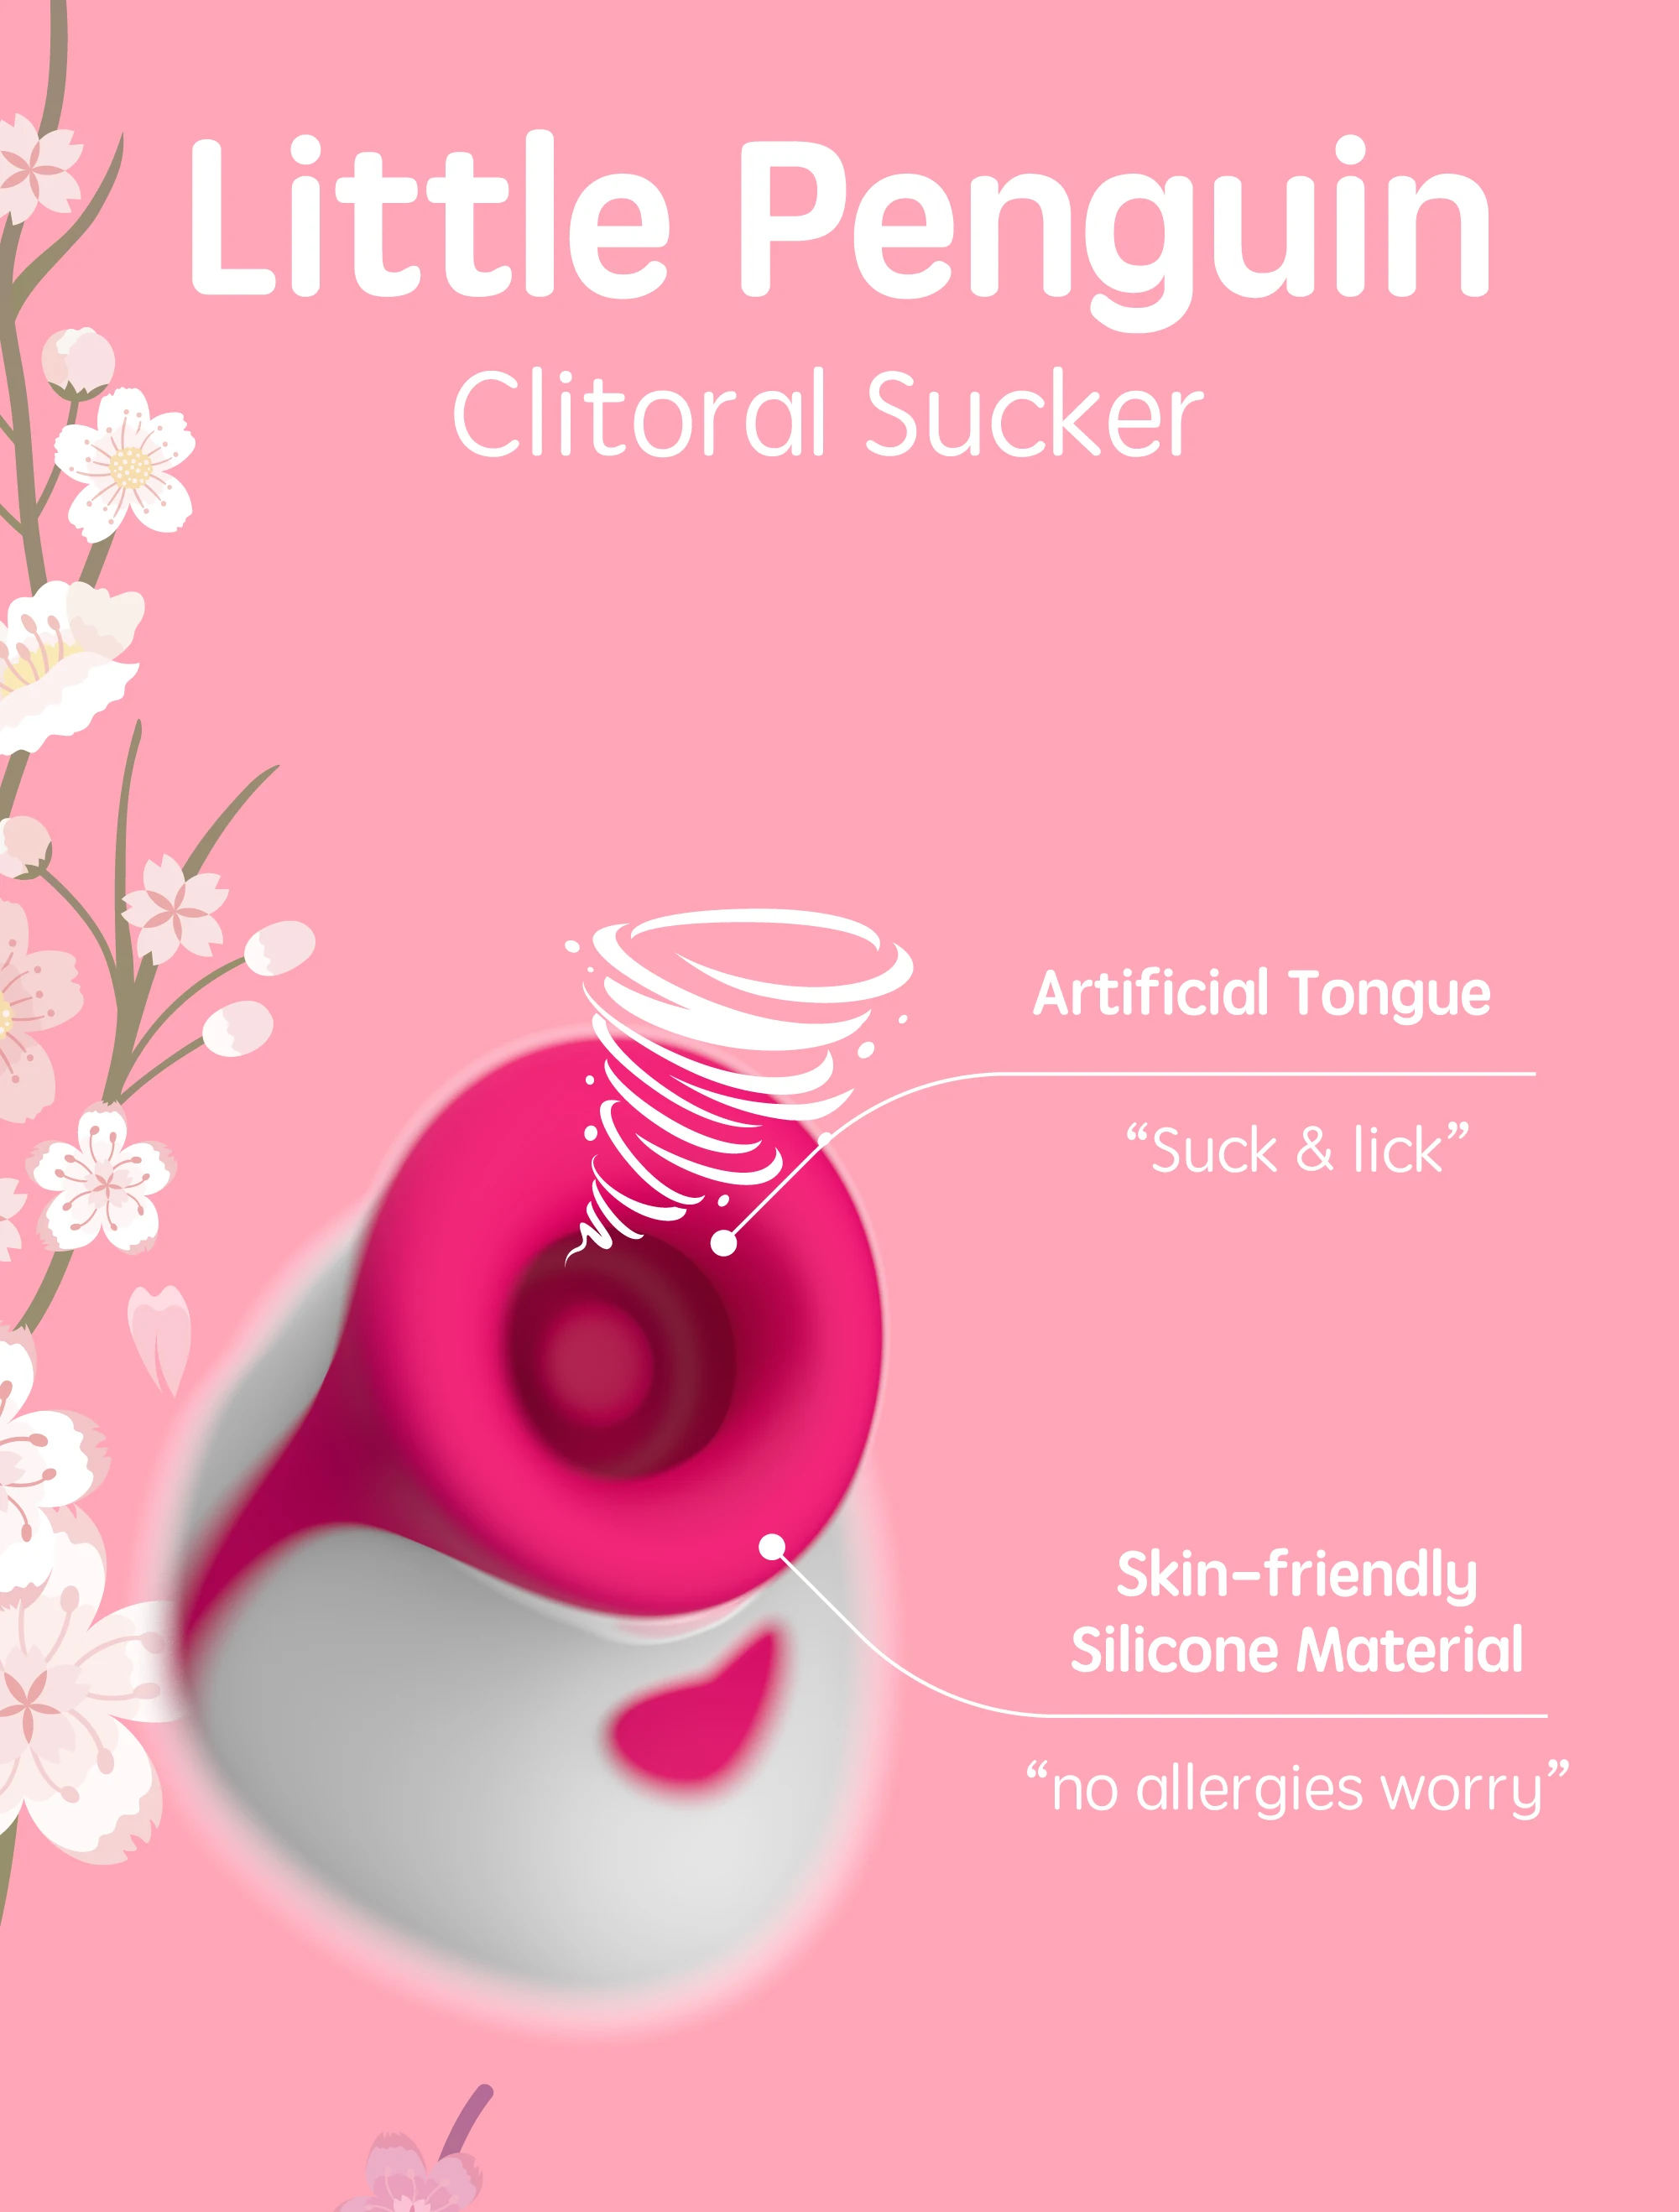 Clit Sucker Vagina Vacuum Oral Sucking Female Clitoris 8 Modes Stimulator Vibrator Nipple Massager Sexy Toys for Women Adults 18 Sa4350864d2bc40c6b38fdda96439fbe6h